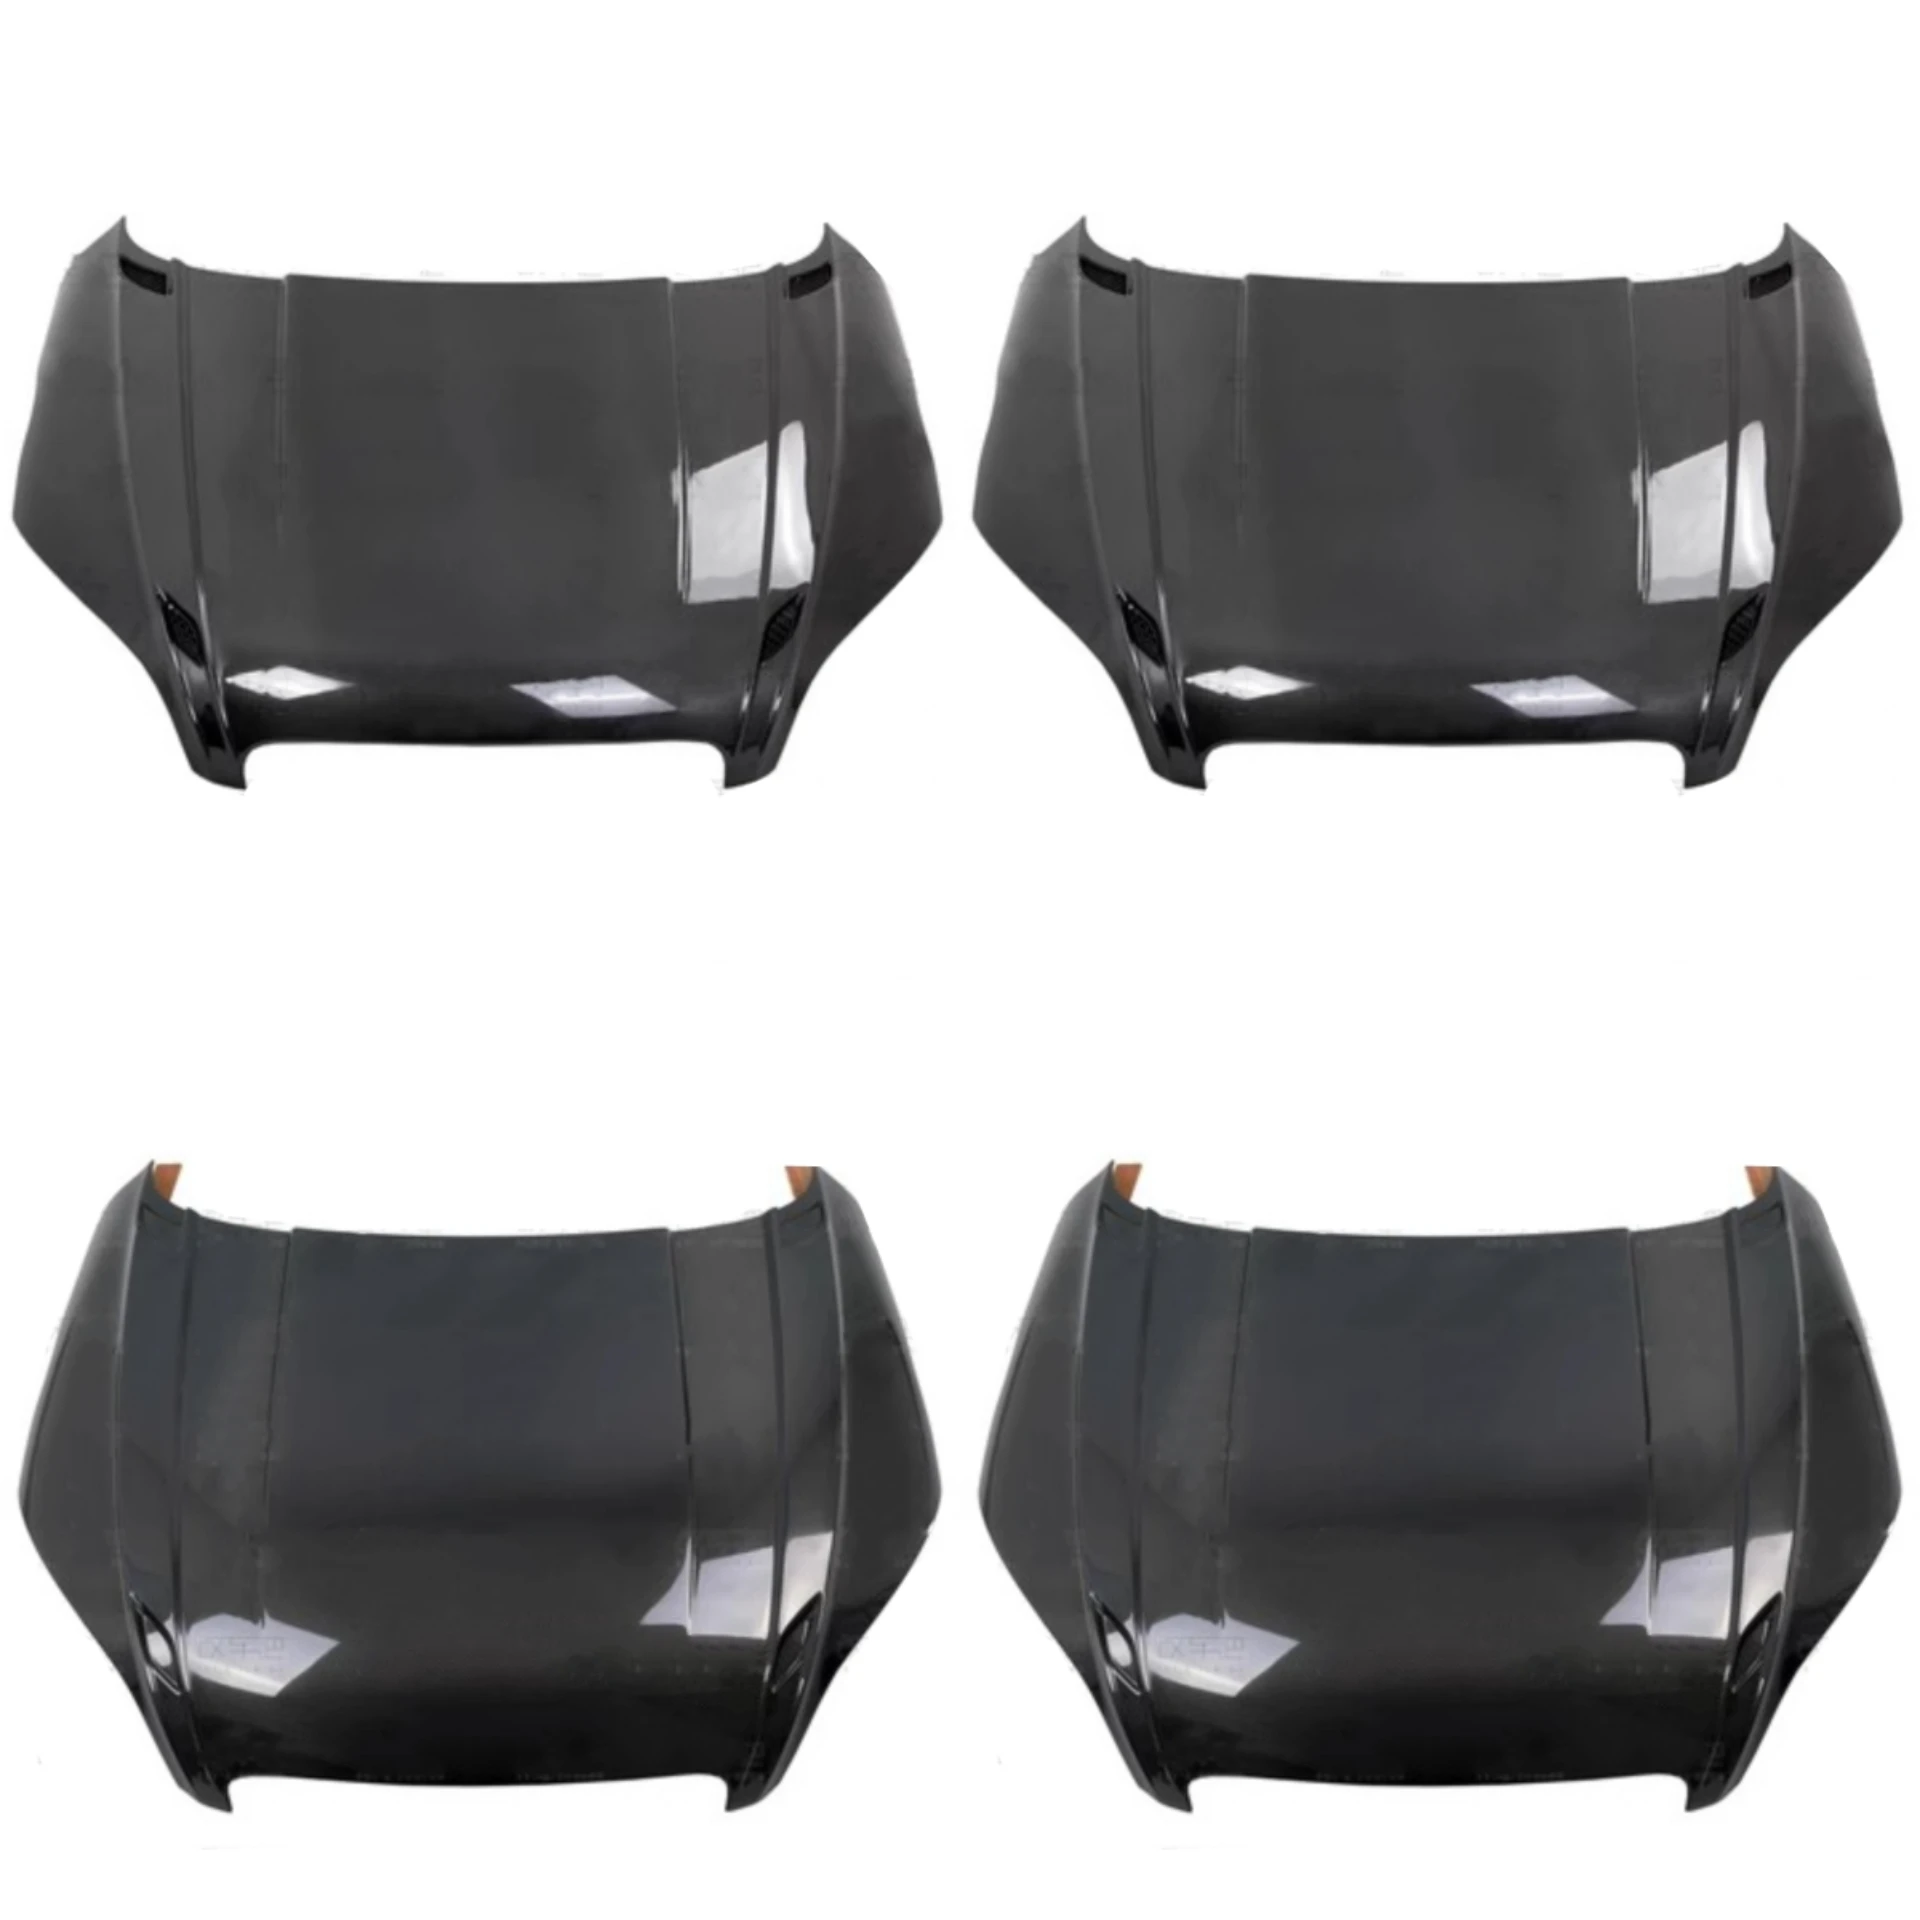 

New Style Carbon Fiber Engine Cover for Audi TT TTRS MK2 2008-2014 Convert Hood Light Weight Bonnet Body Kit Car Accessories